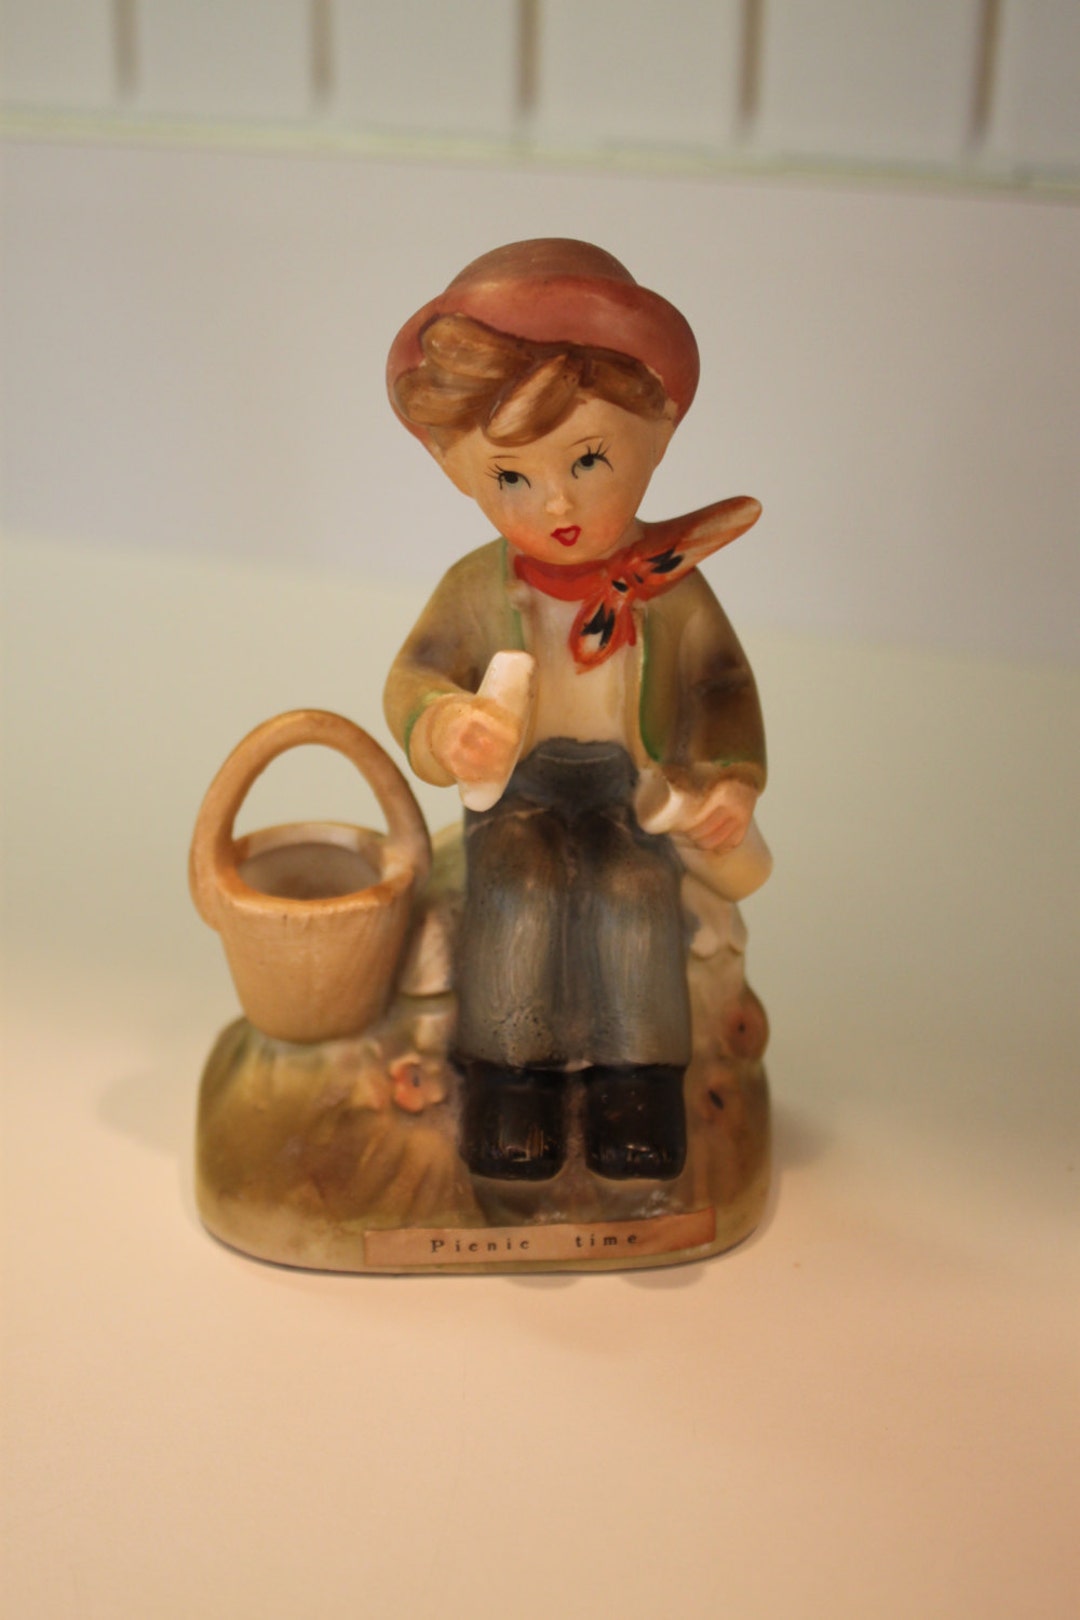 Buy Vintage Erich Stauffer Time Boy Porcelain Figurine Online in India - Etsy